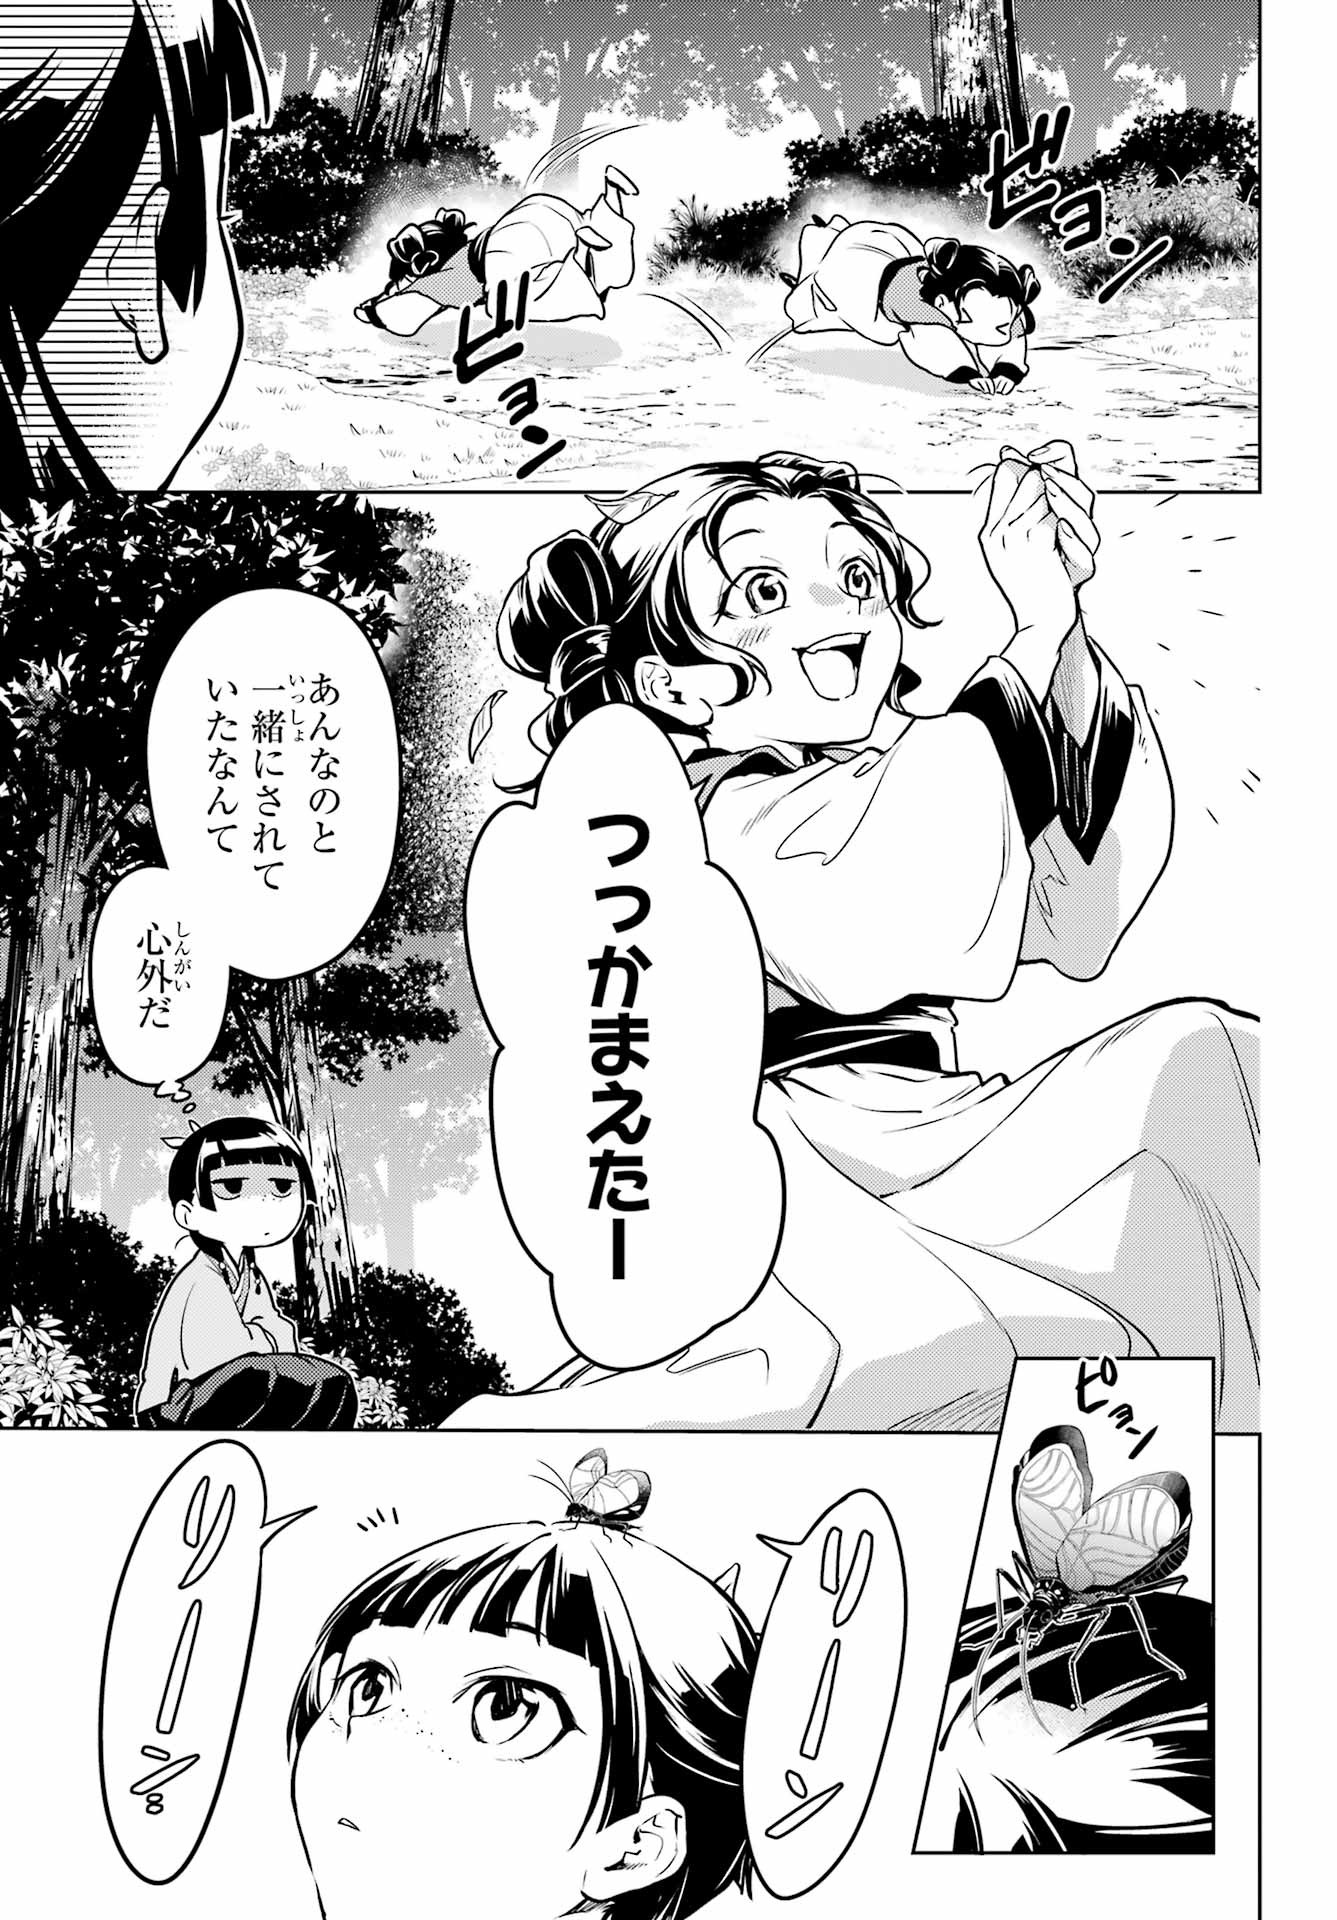 Kusuriya no Hitorigoto - Chapter 55-1 - Page 25